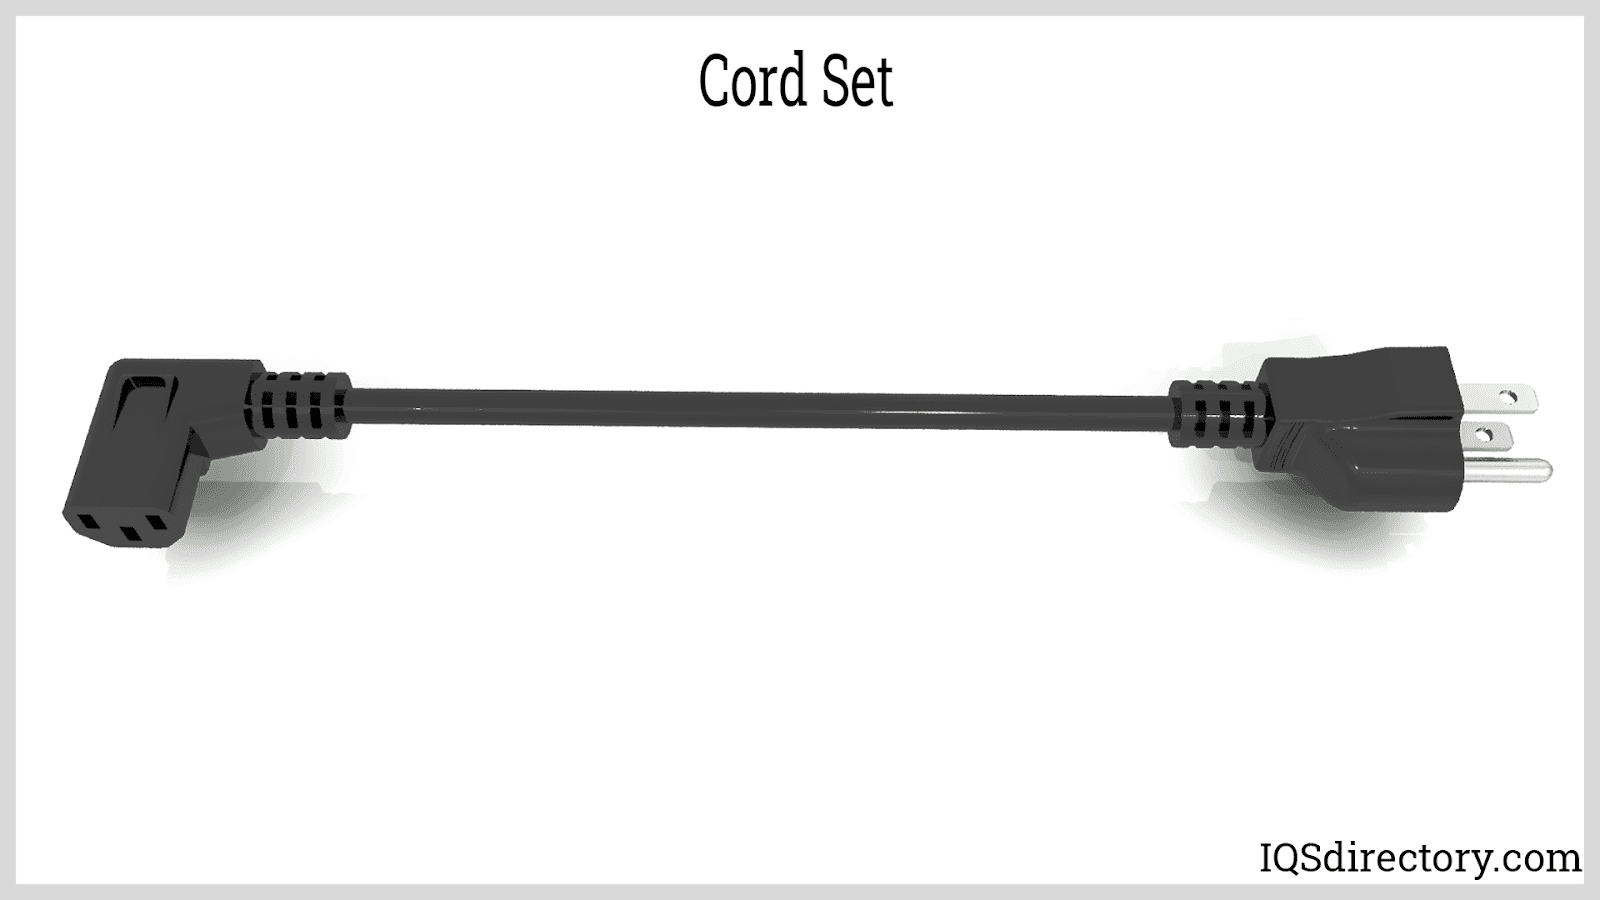 Cord Set